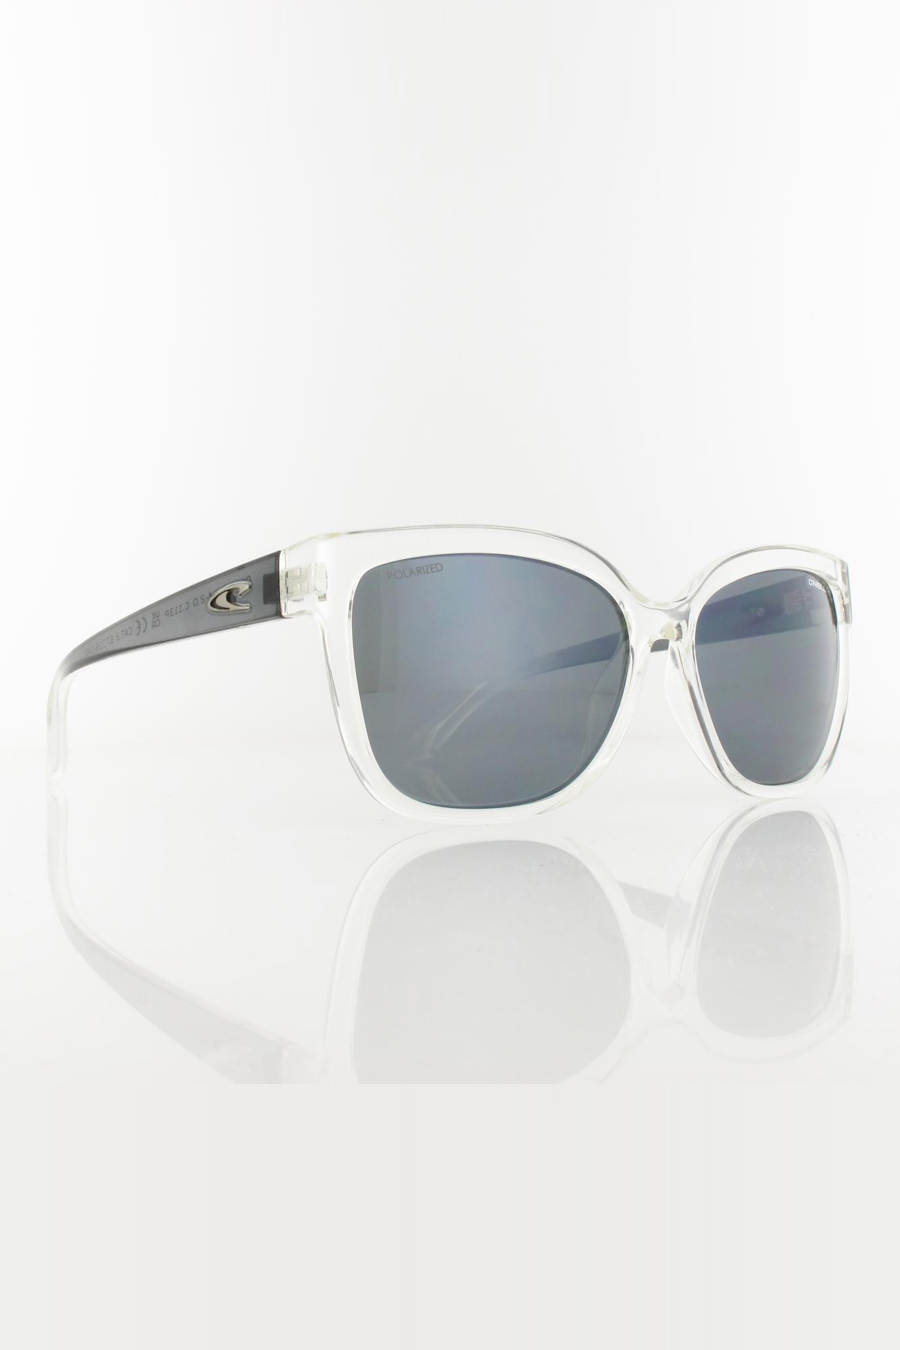 Sunglasses ONEILL ONS-9034-20-113P